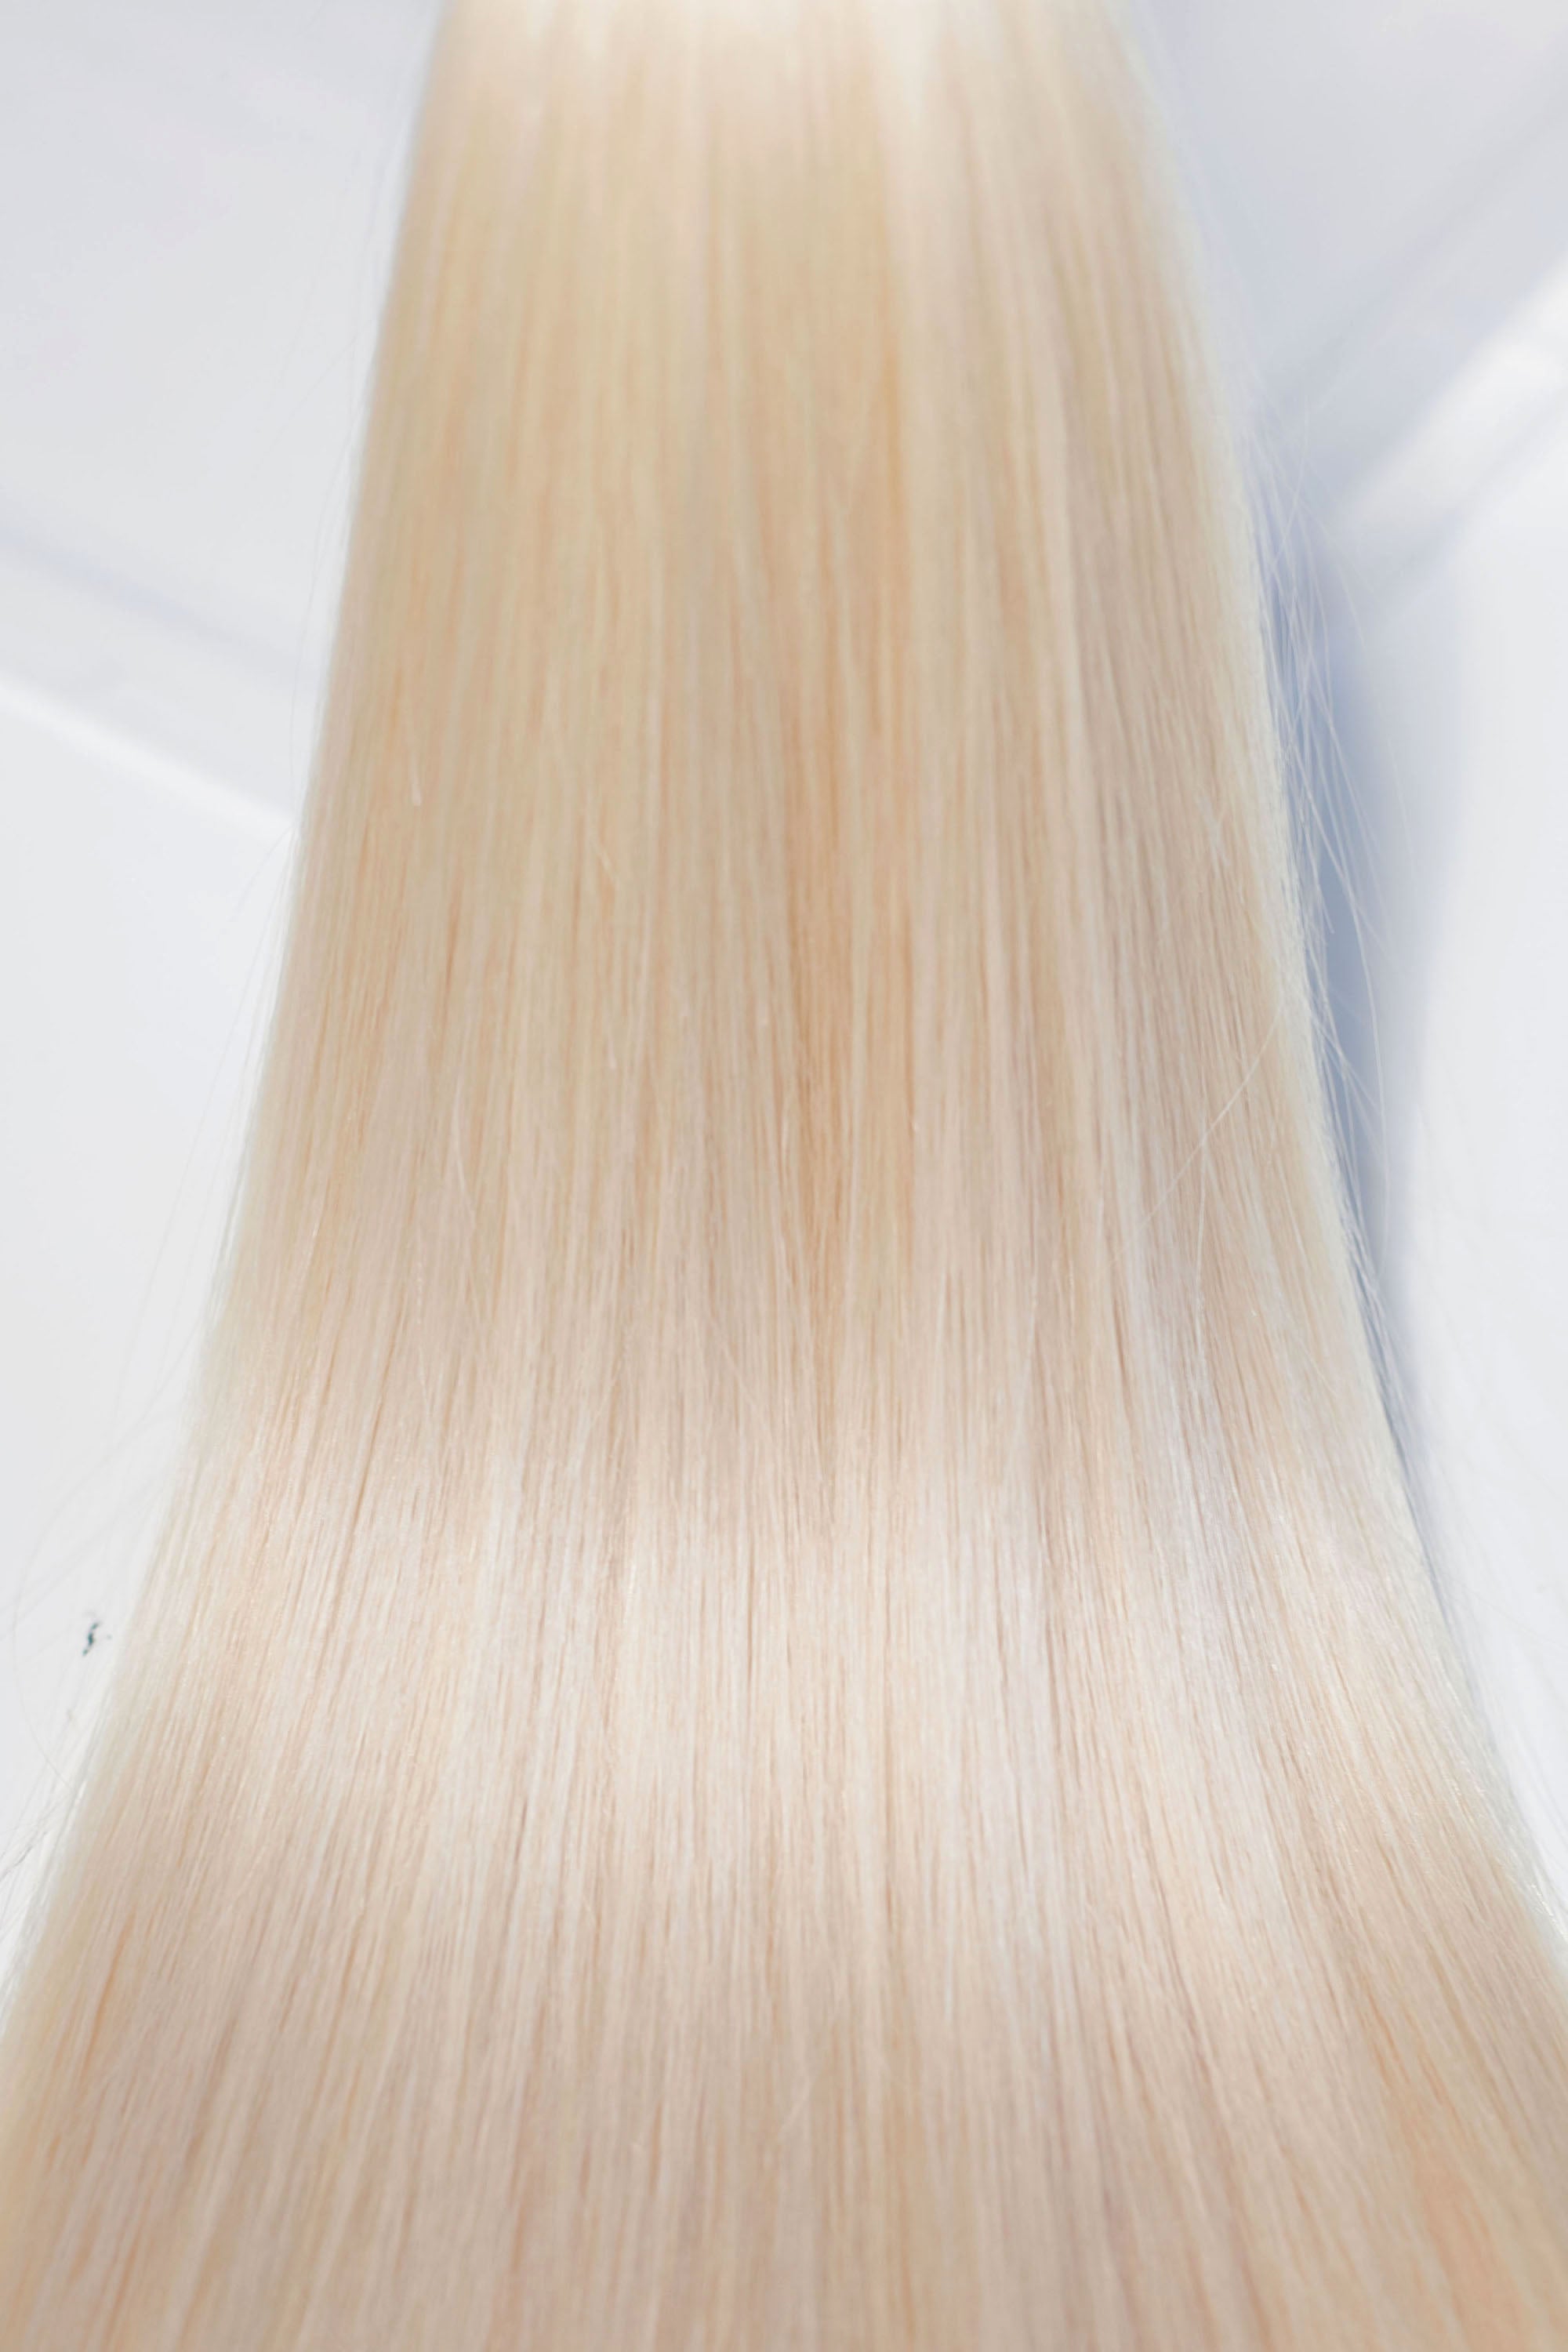 Behair professional Keratin Tip "Premium" 26" (65cm) Natural Straight Ice Blond #000 - 25g (1g each pcs) hair extensions